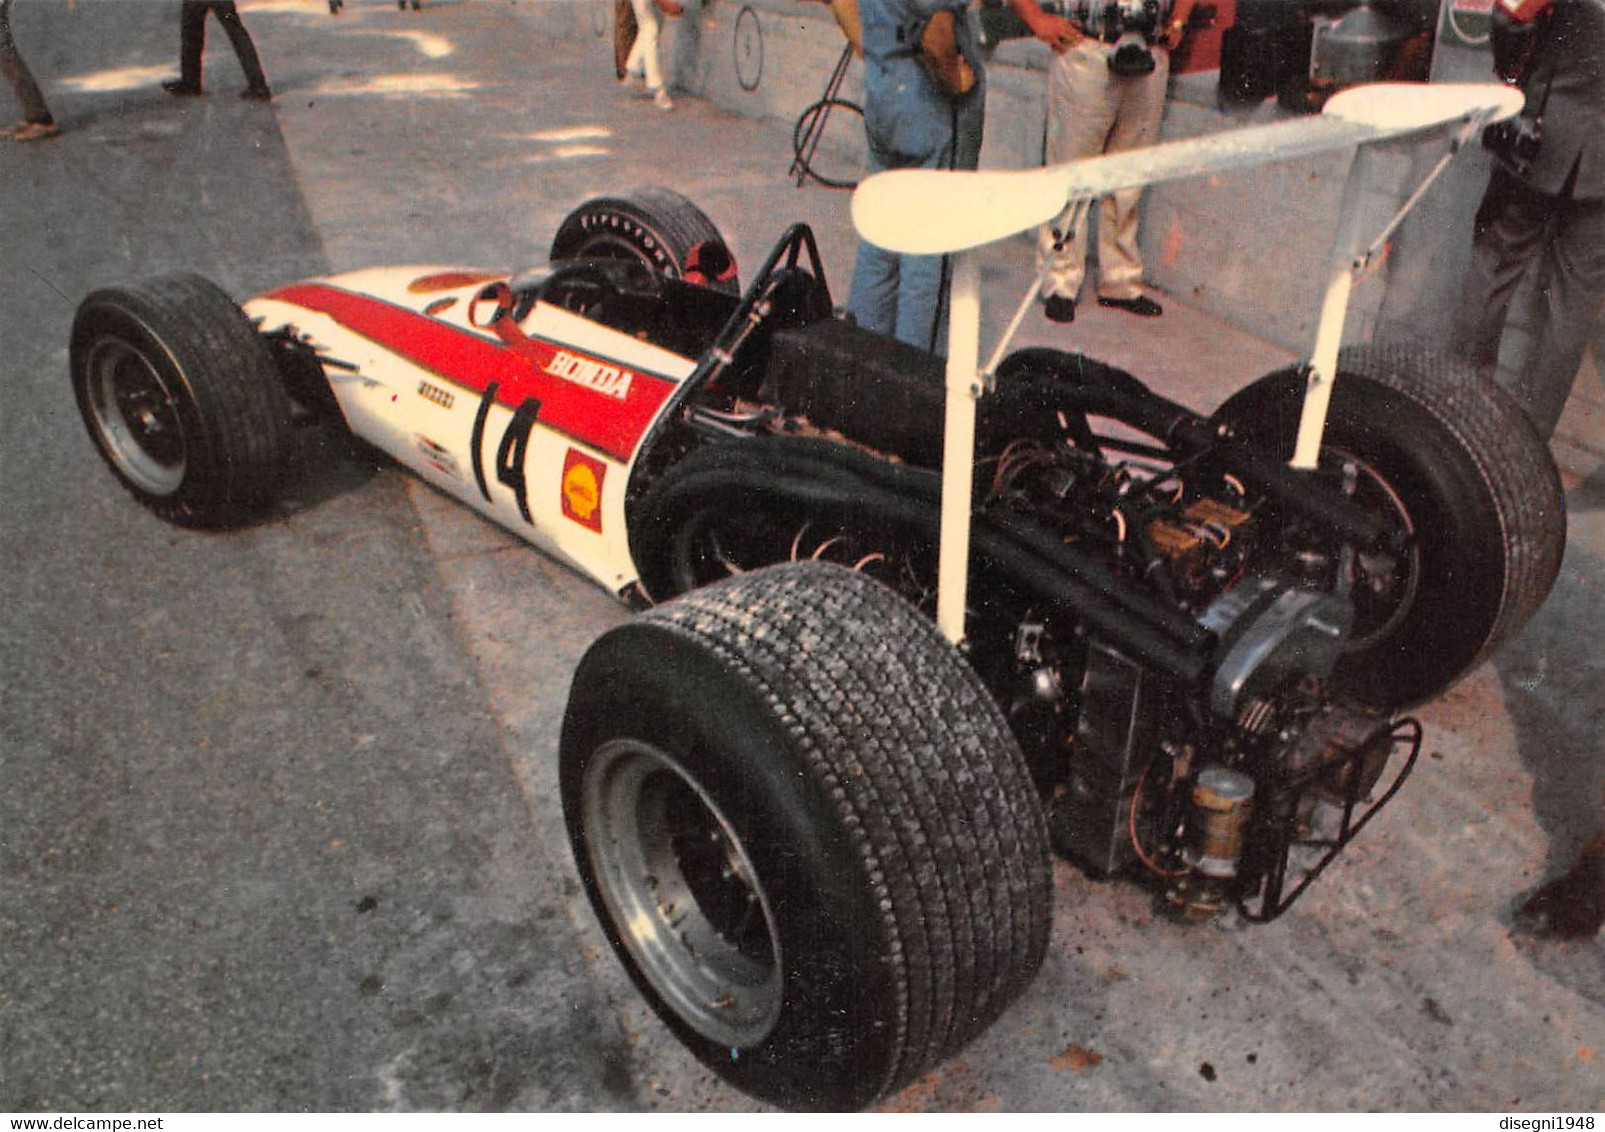 011005 " JOHN SURTEES - HONDA F. 1 1968 - GRAN PREMIO D'ITALIA 1968 - MONZA" CARTOLINA  ORIG. NON SPED. - Automobilismo - F1